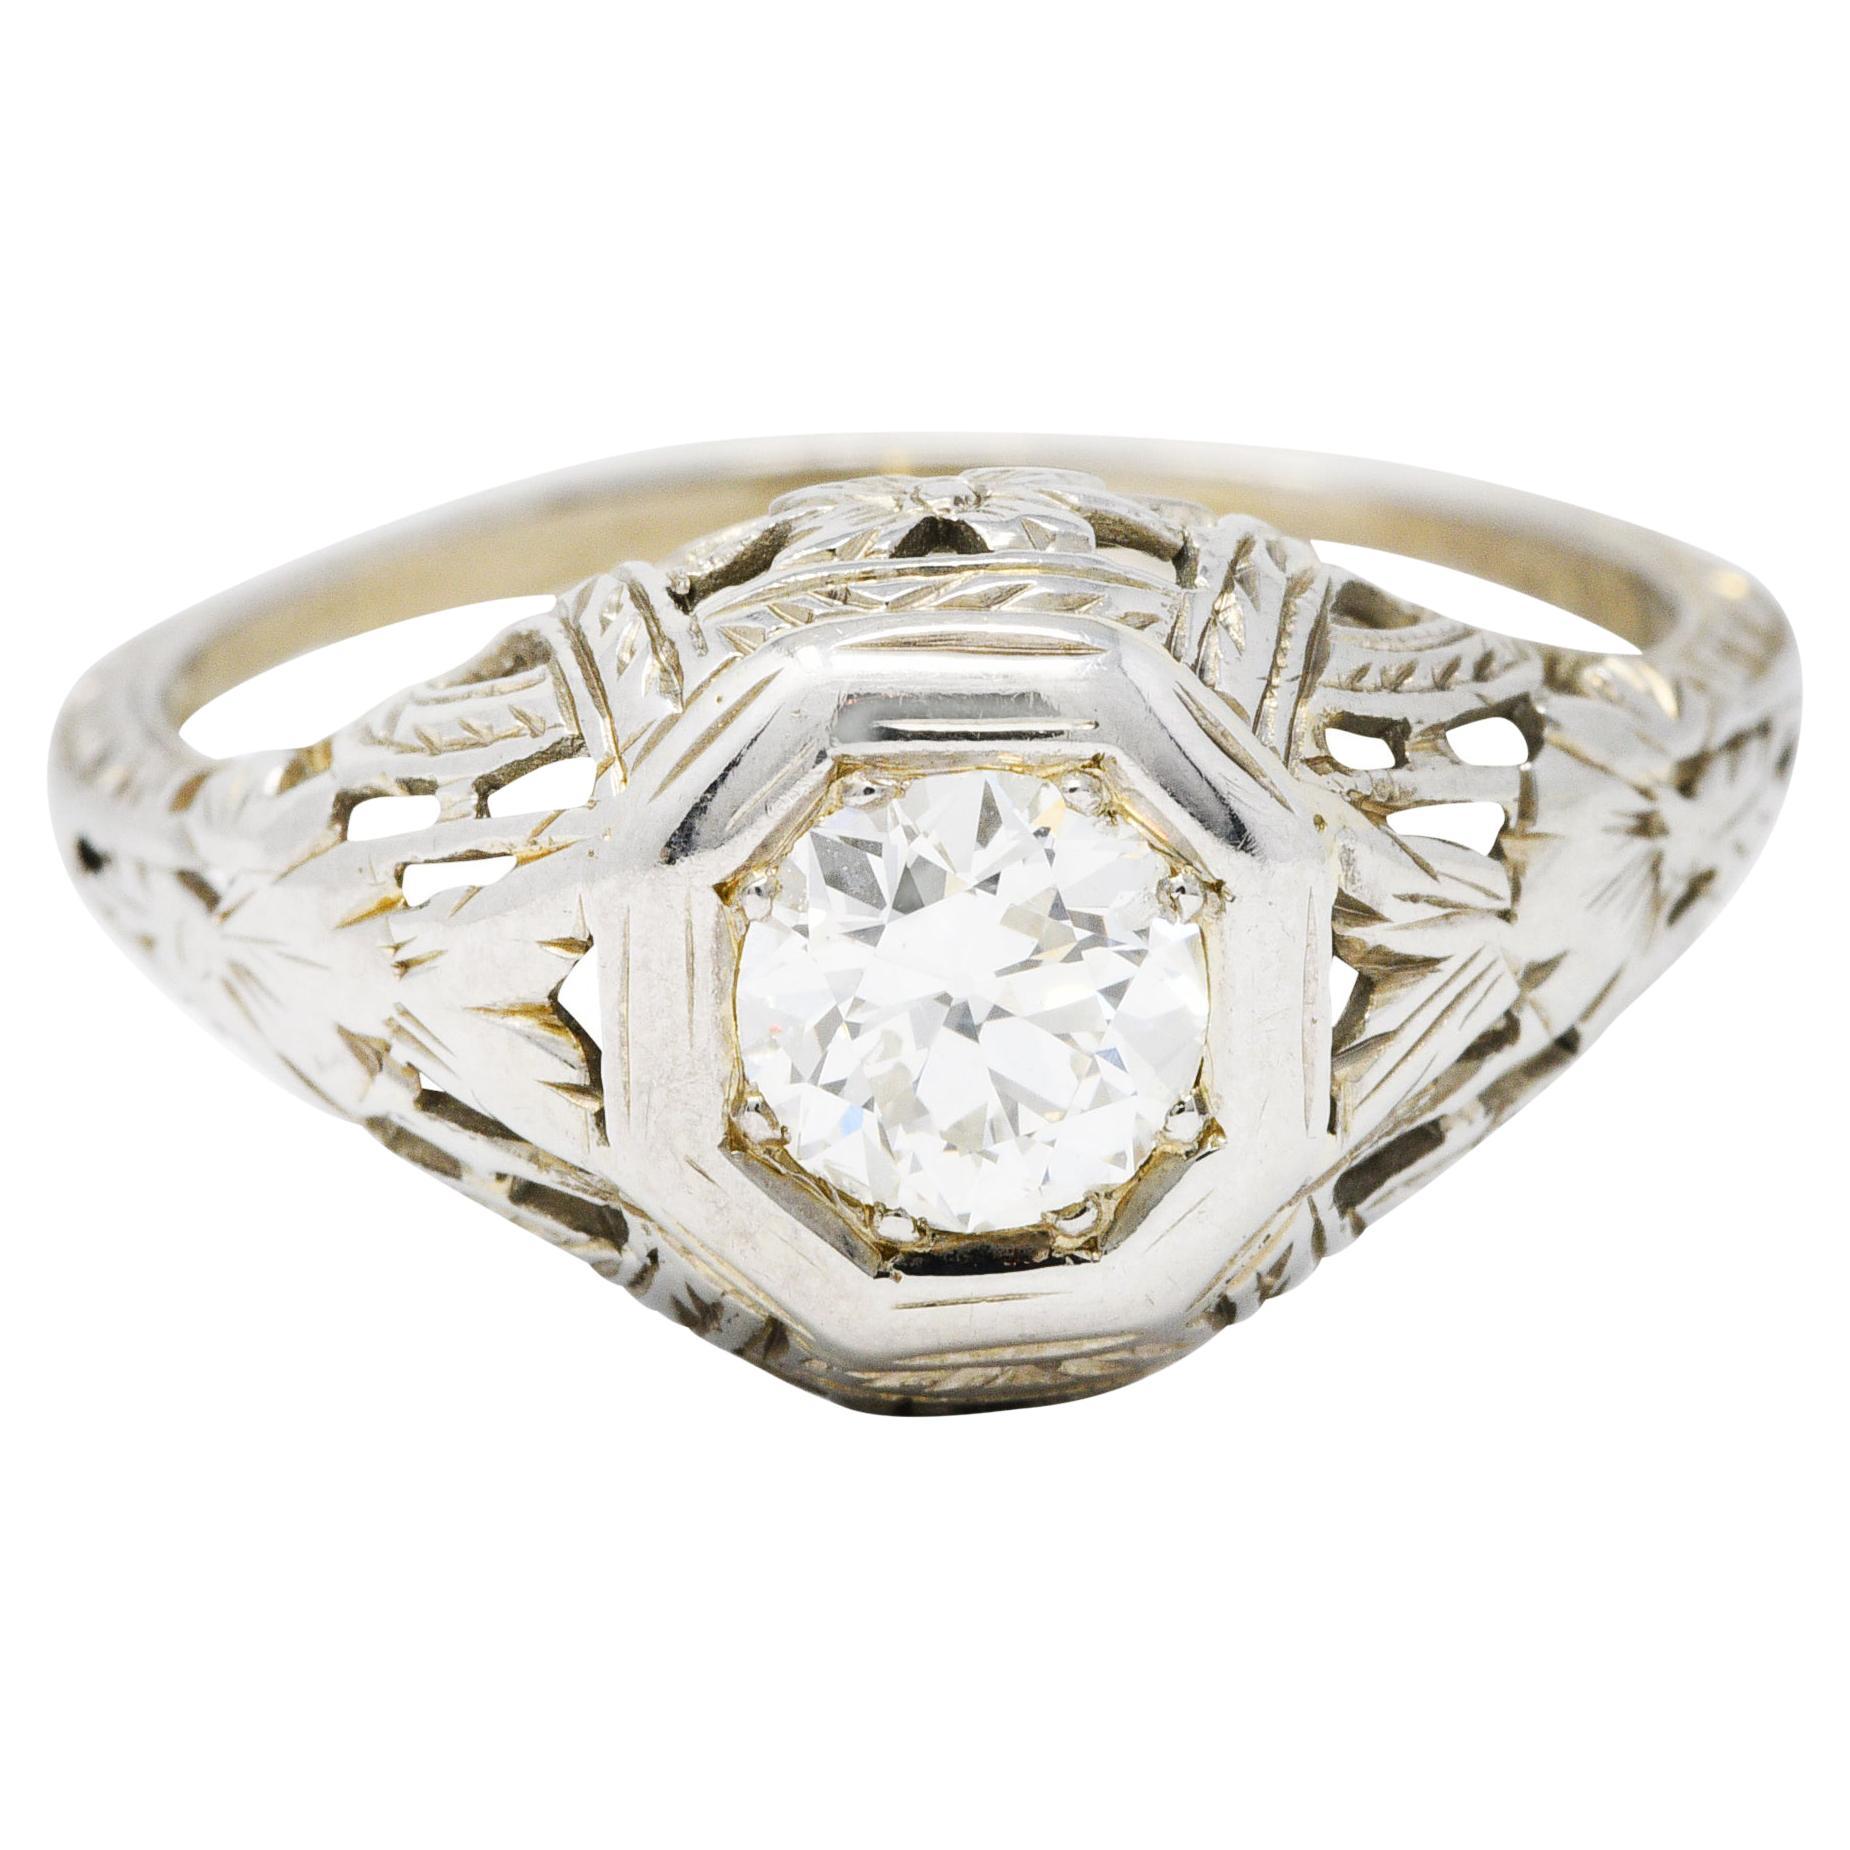 1920's Art Deco Diamond 18 Karat White Gold Blossom Engagement Ring